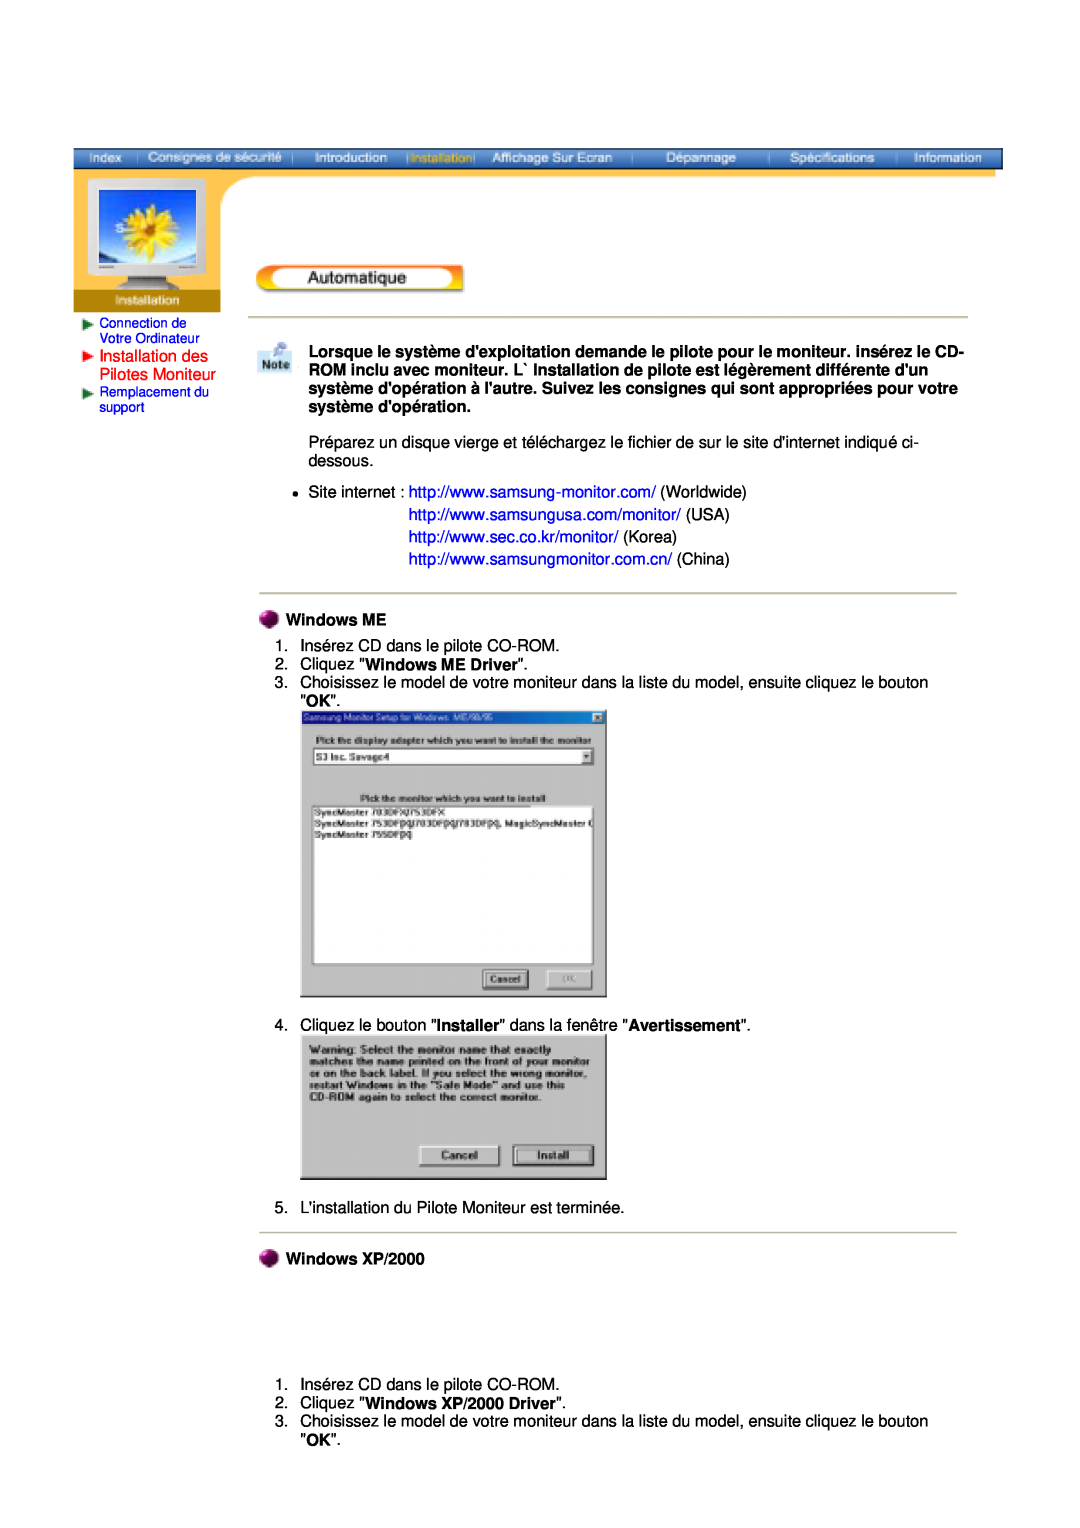 Samsung NB17ASHN/EDC, NB17BSPSV/EDC manual Installation des Pilotes Moniteur, Cliquez Windows ME Driver, Windows XP/2000 